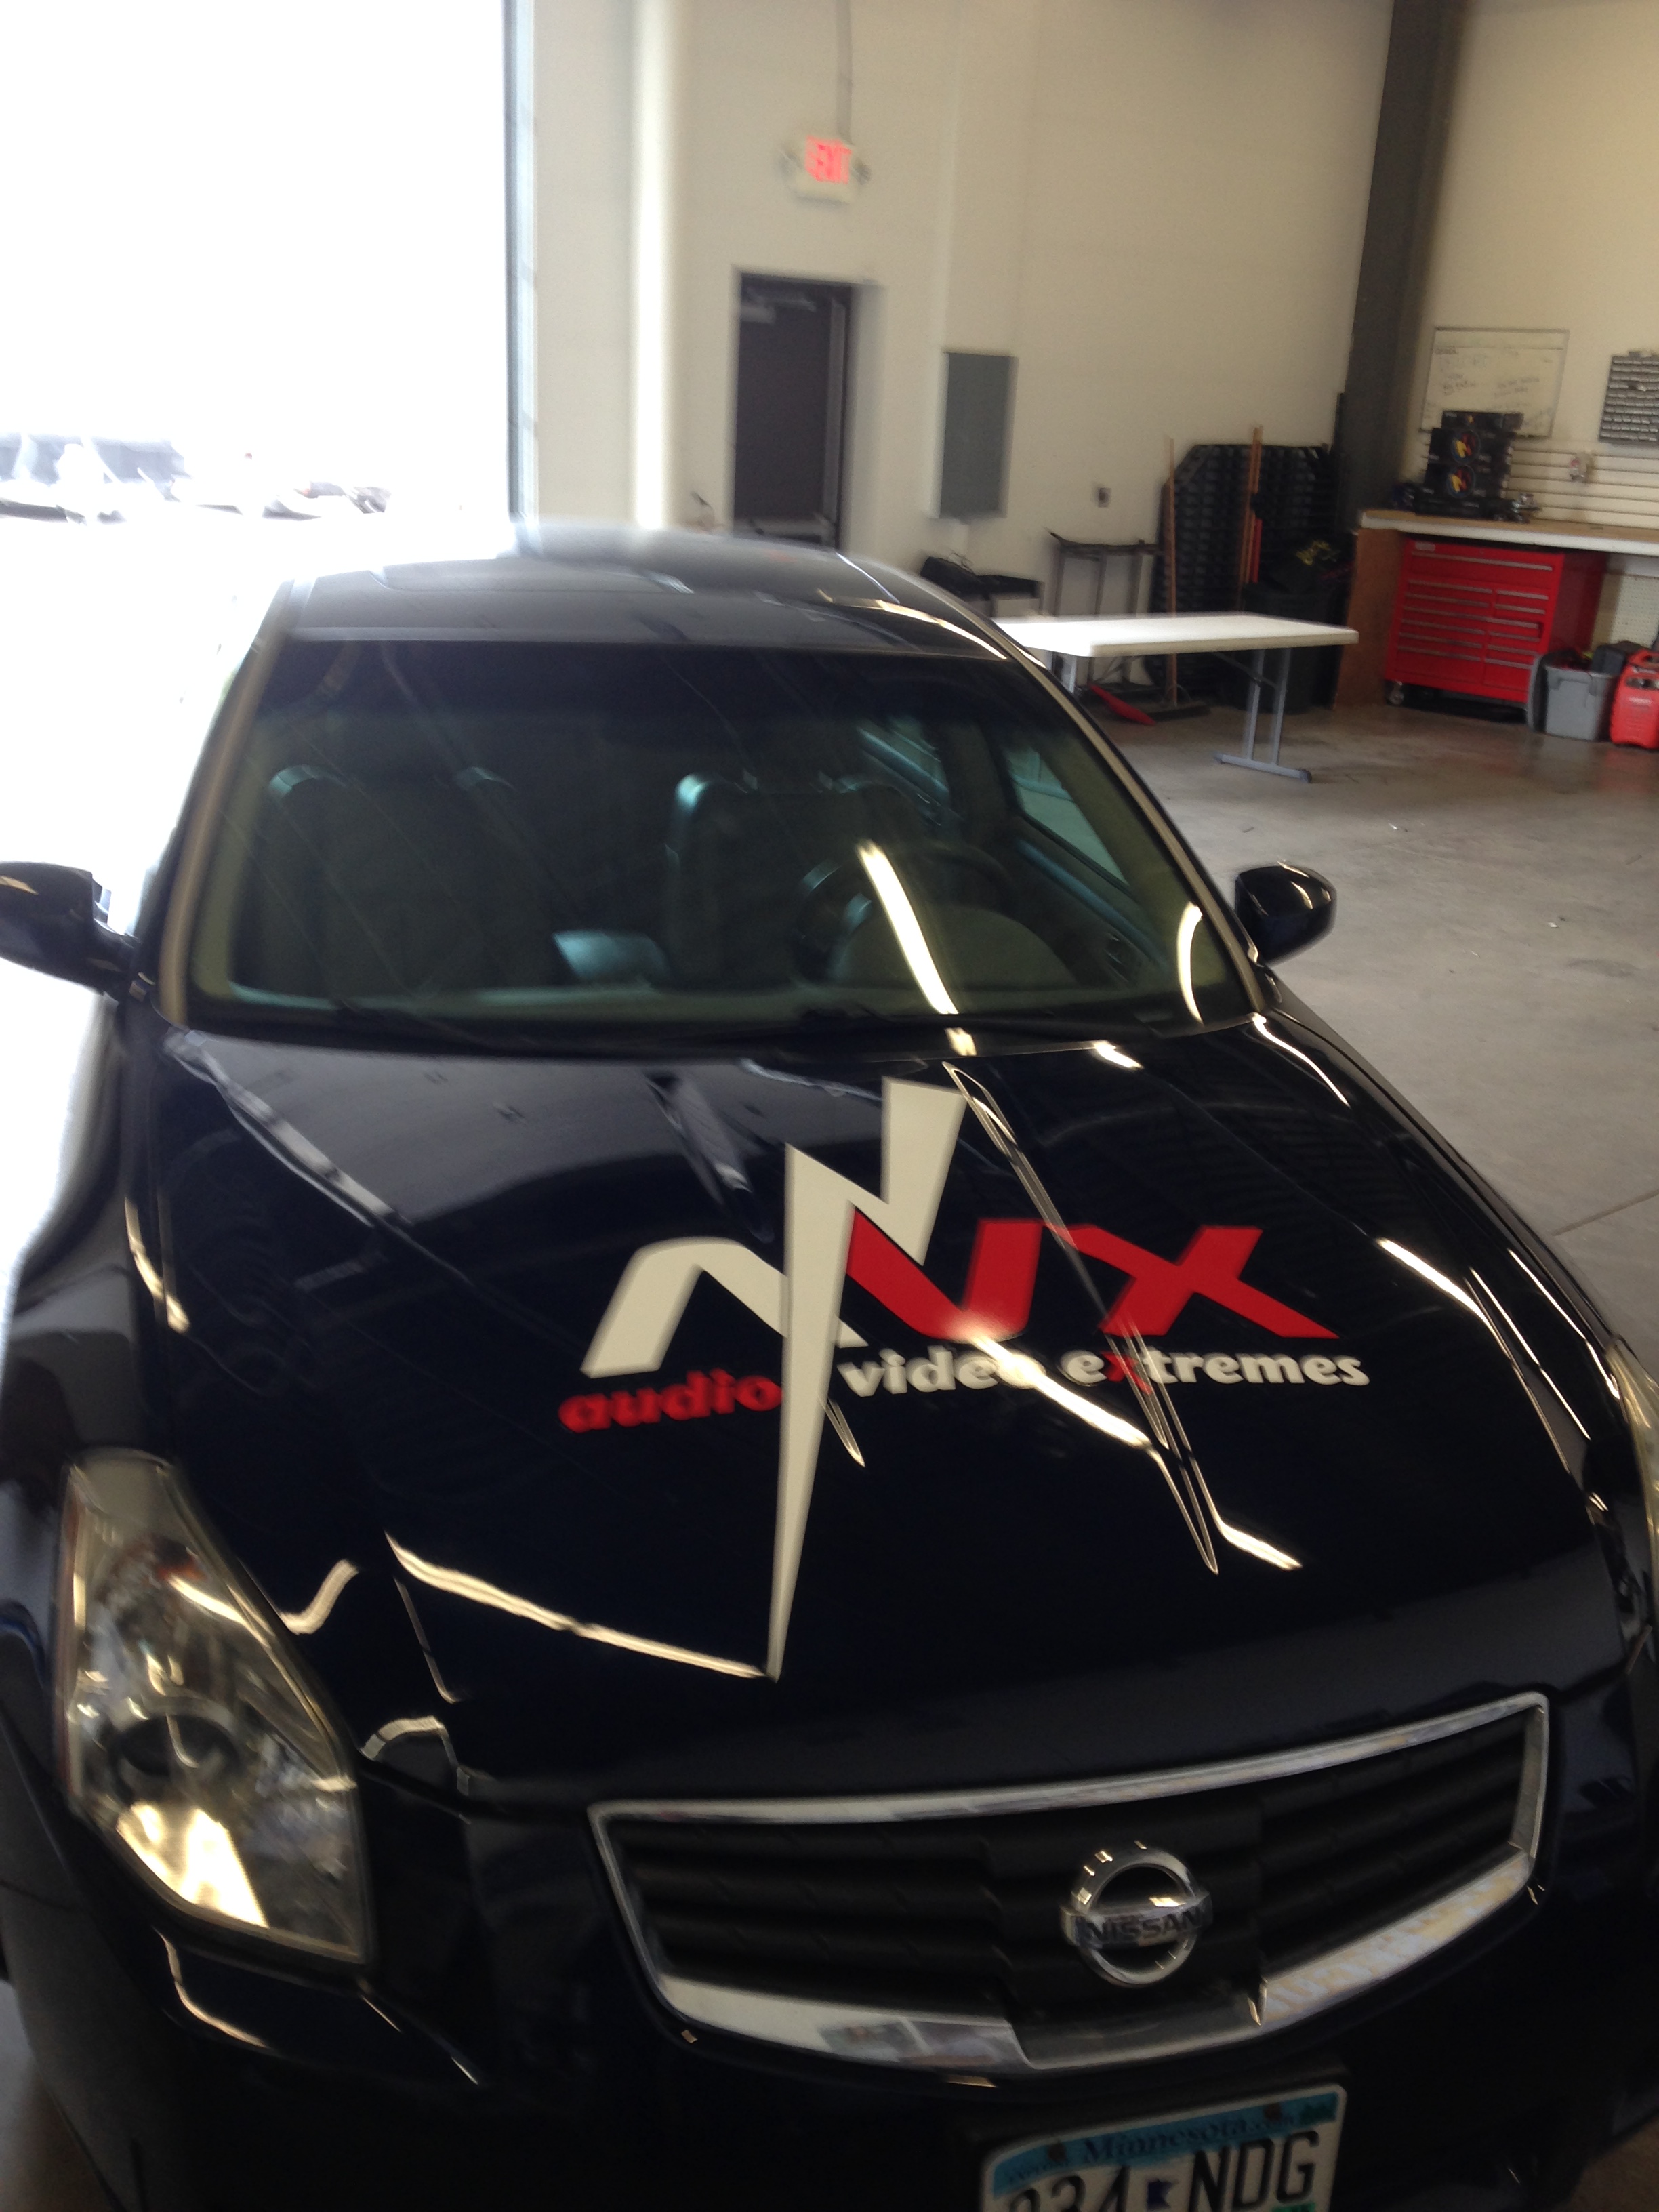 Audio Video Extreme's Car Wrap | Signmax.com